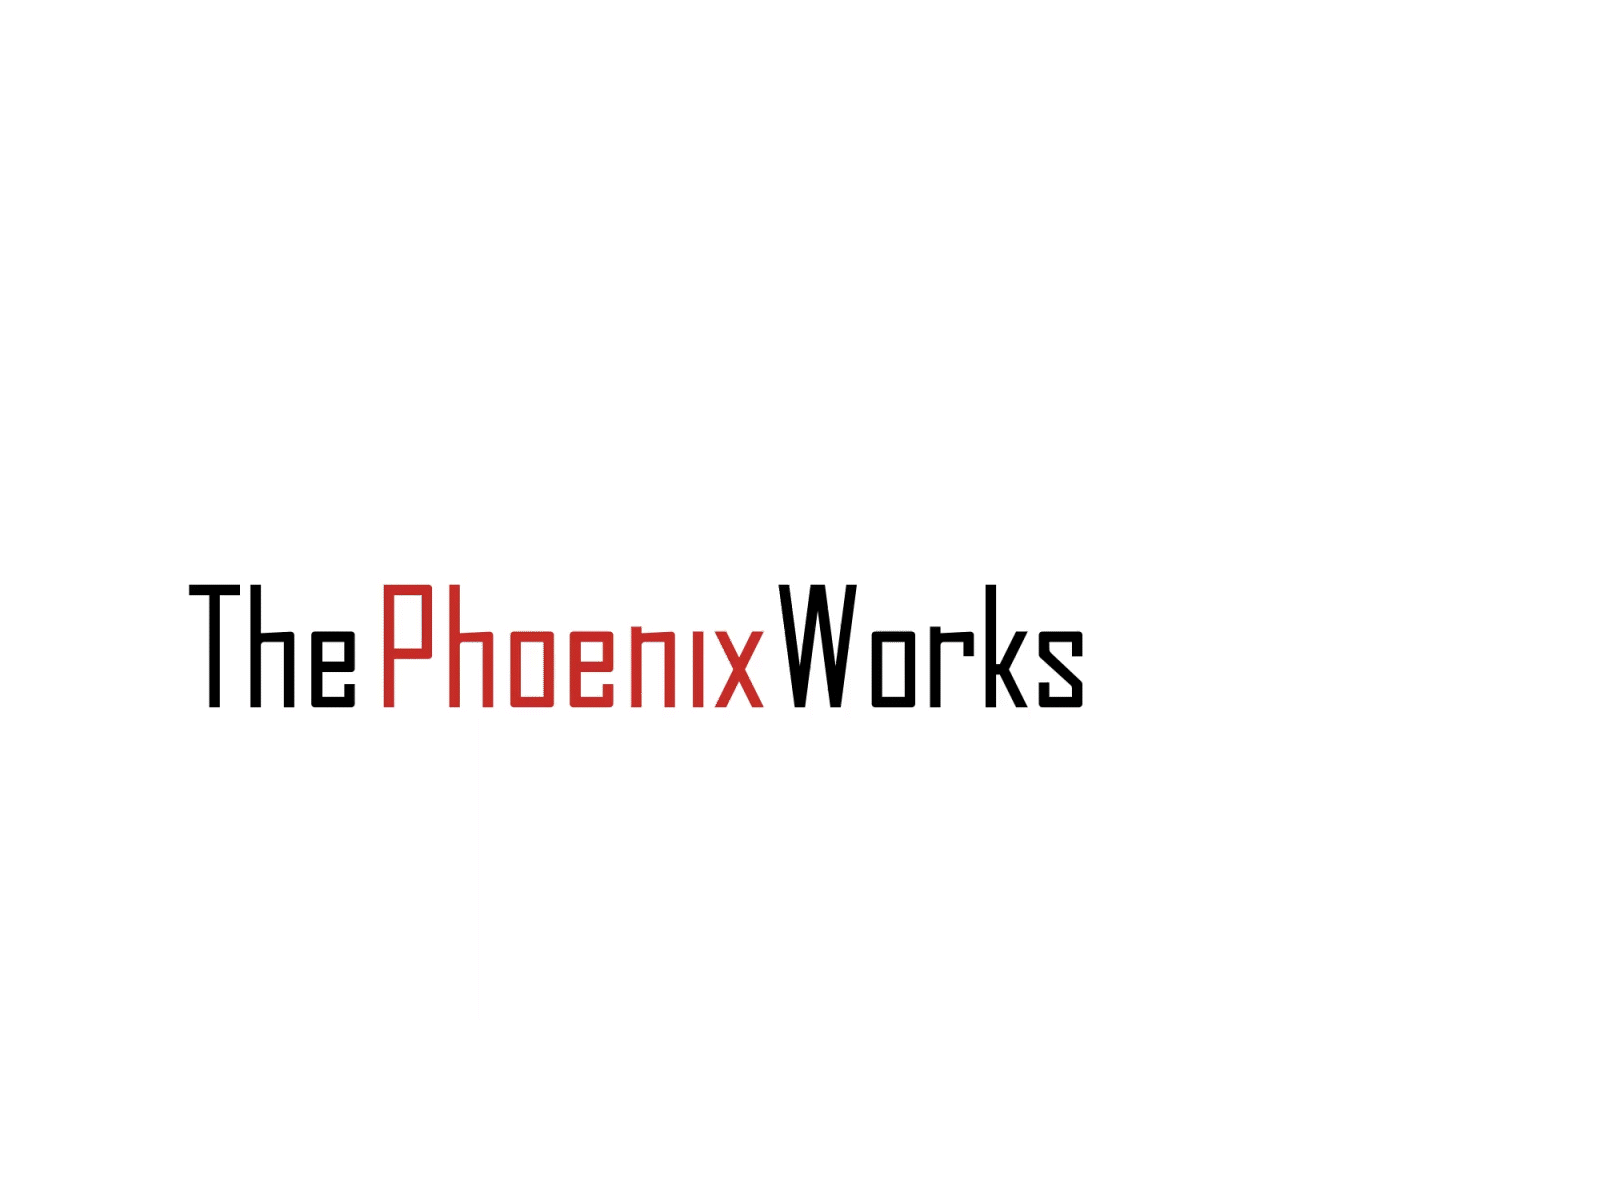 The phoenix works logo Lottie JSON animation